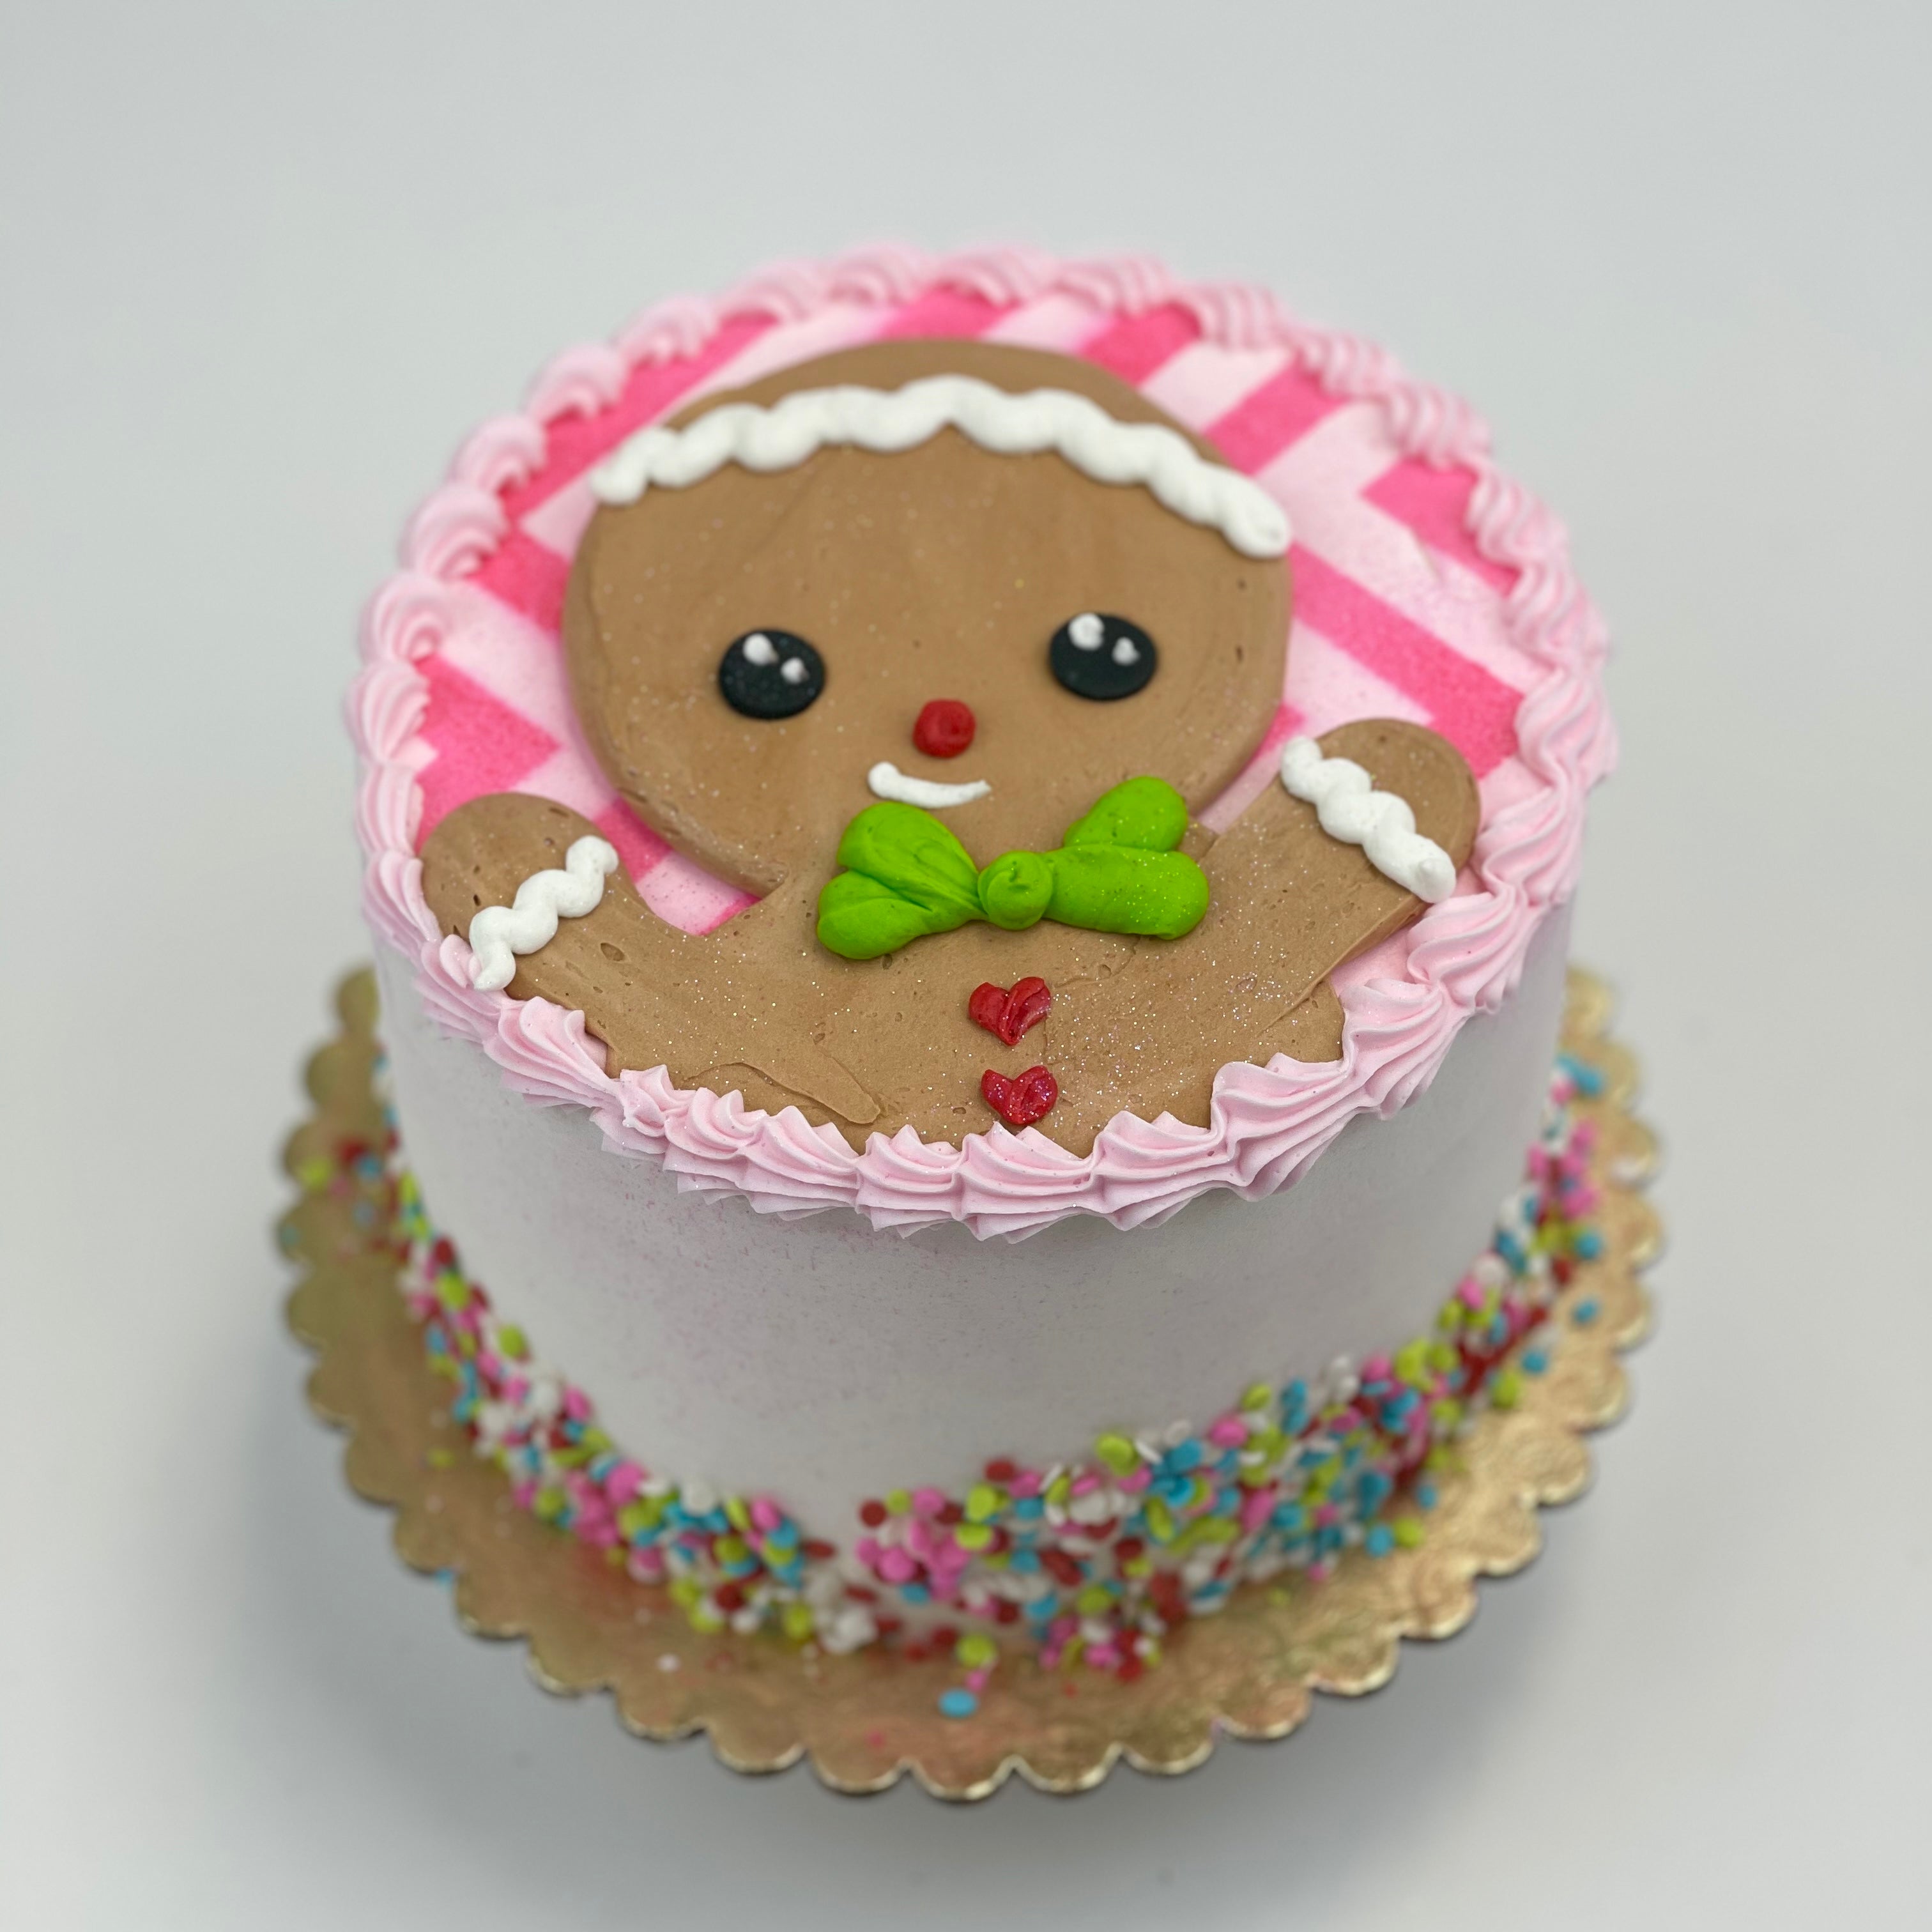 Birthday Cakes for Children - Order Online, We Deliver